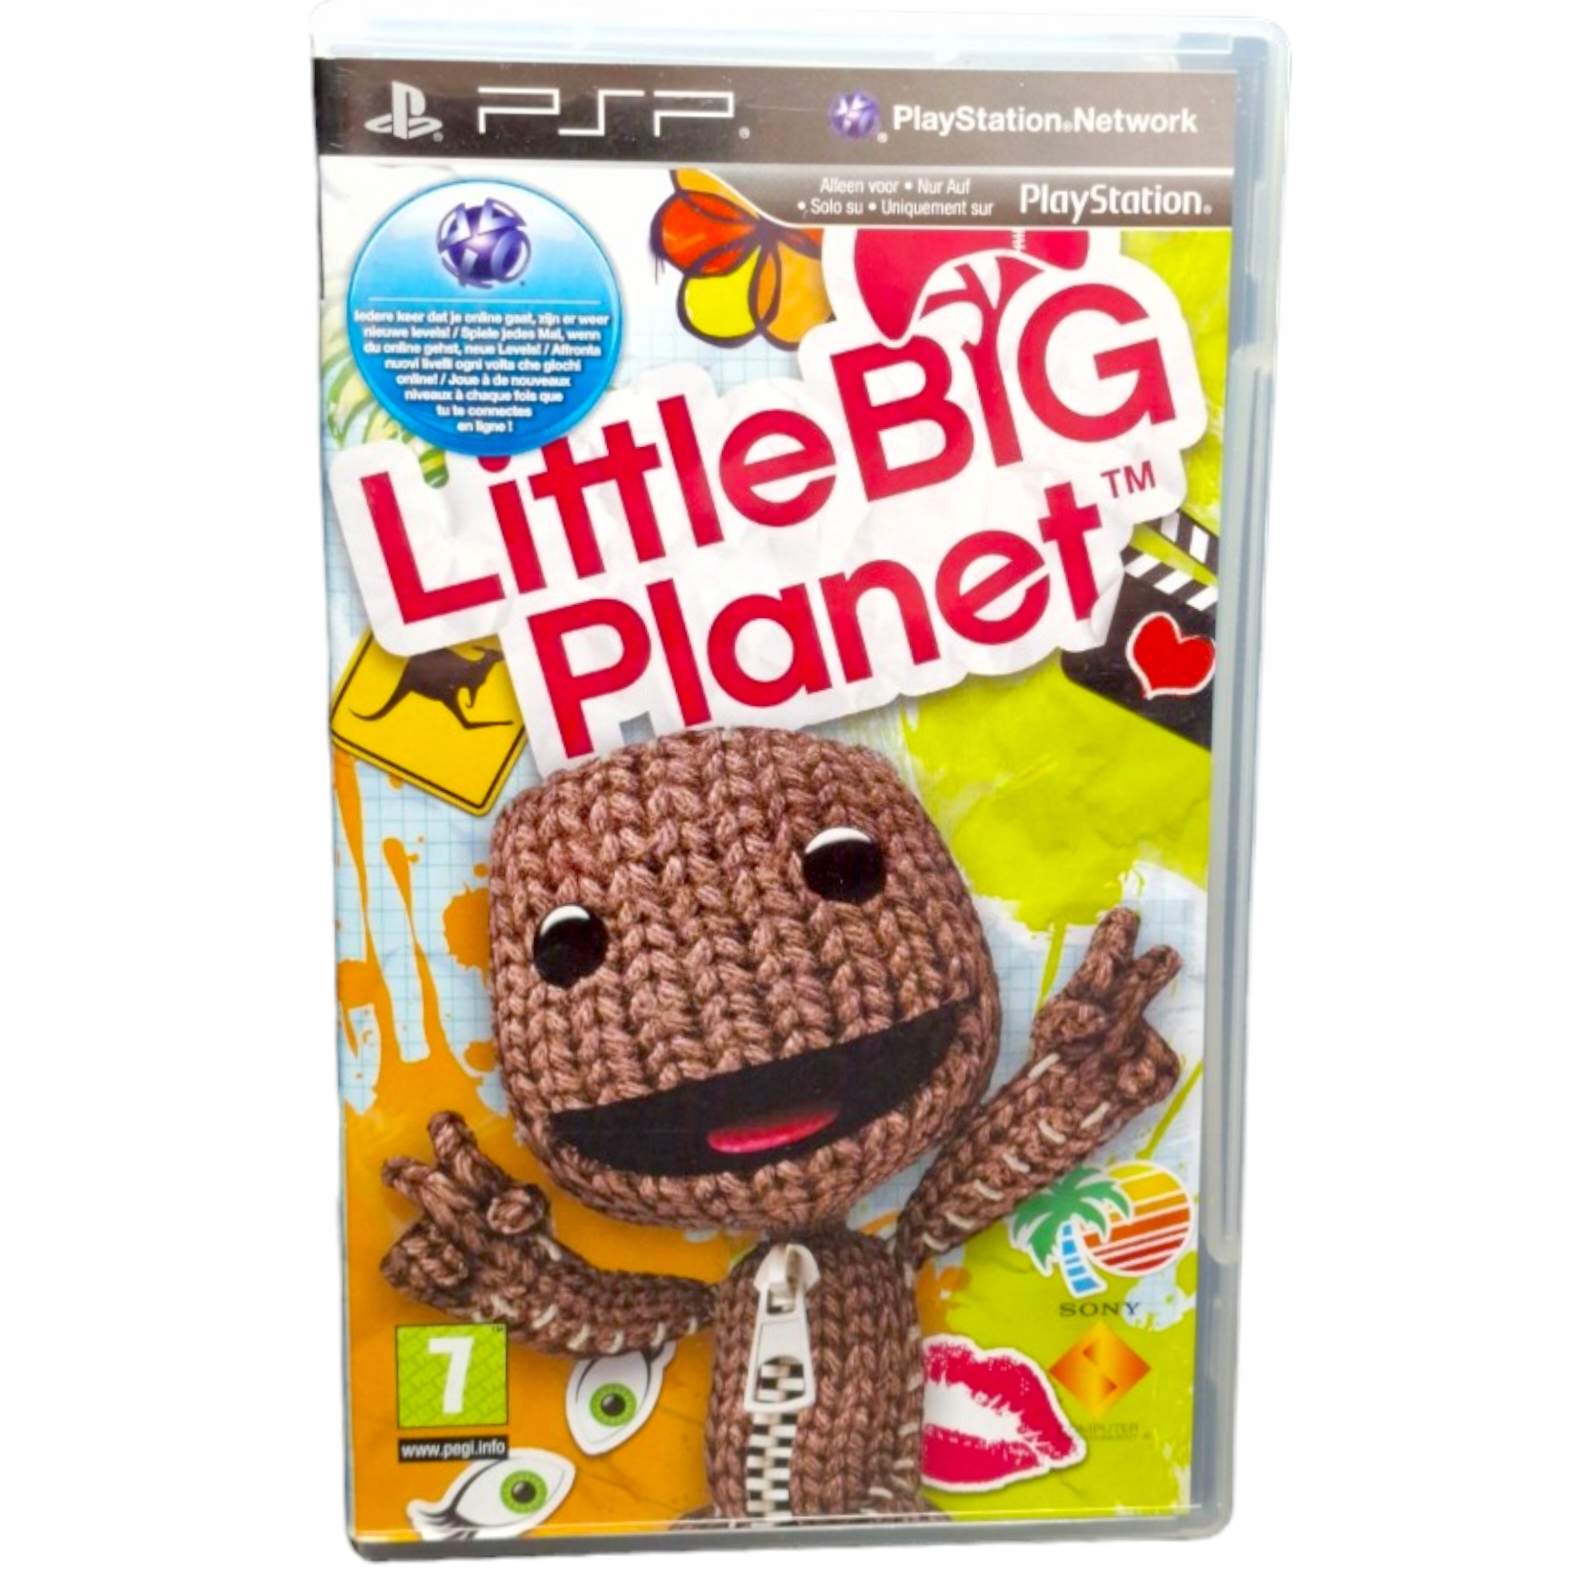 Little Big Planet Sony PSP